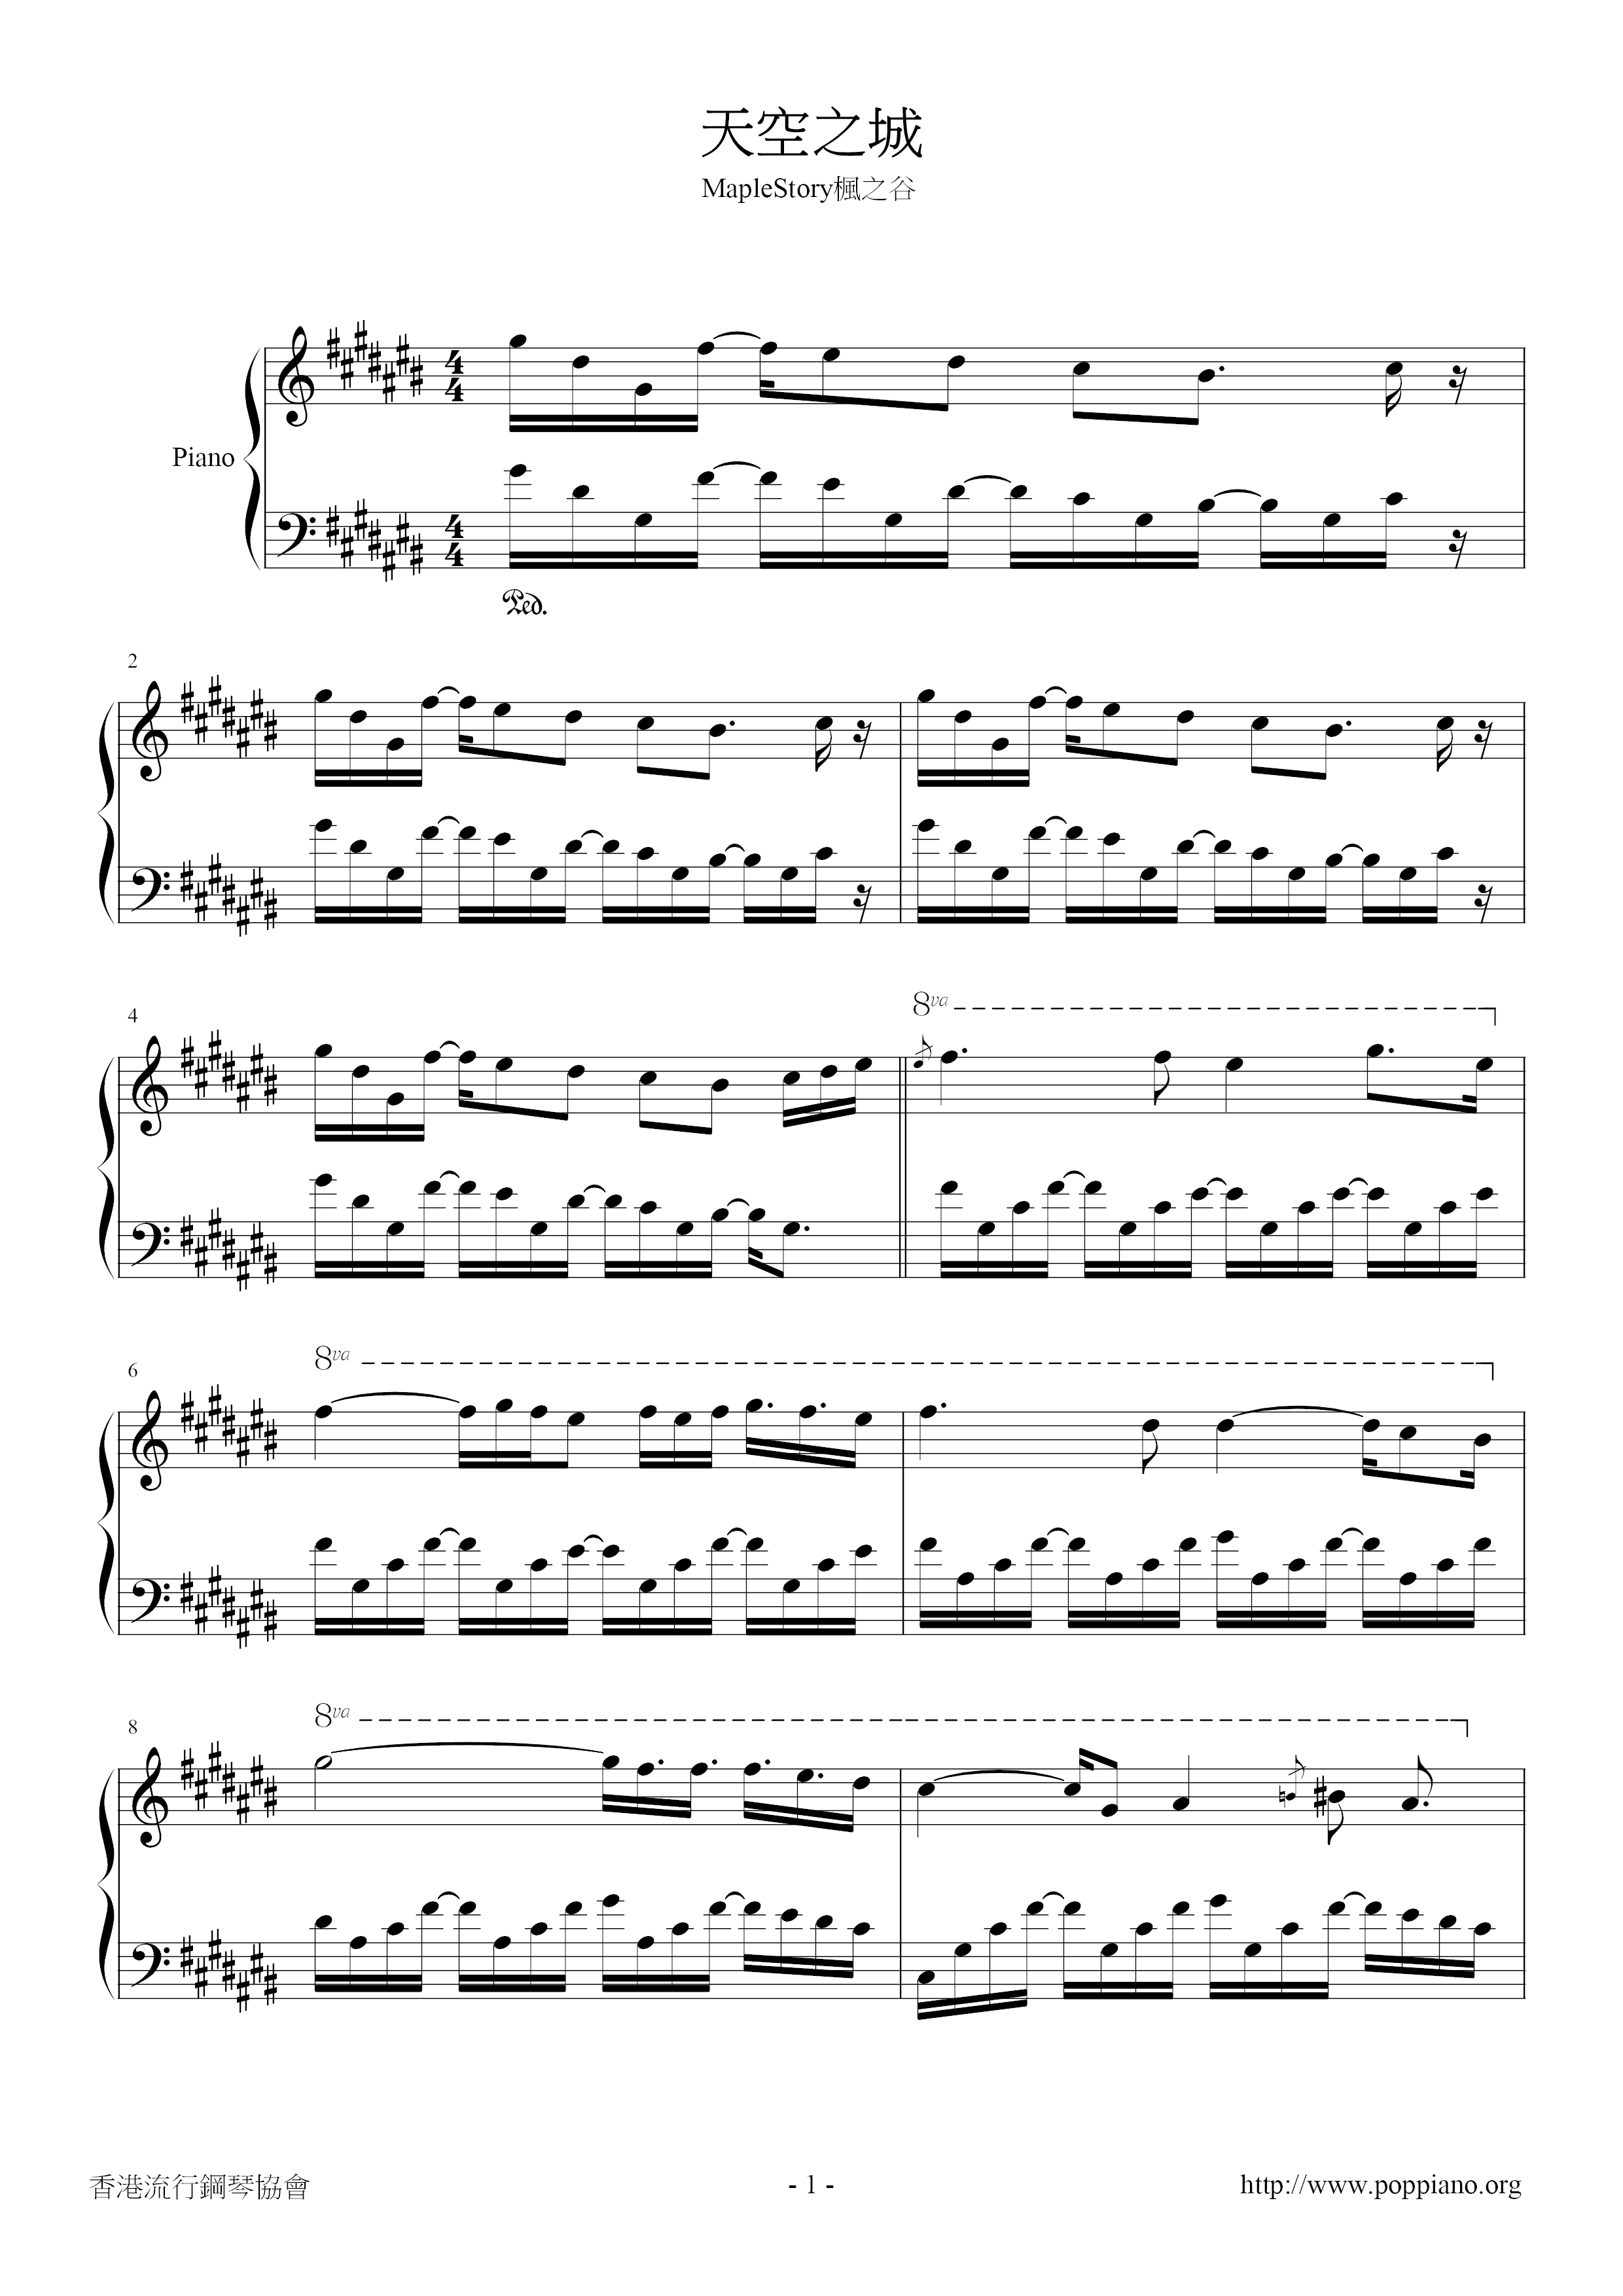 Laputa - Maplestory Score